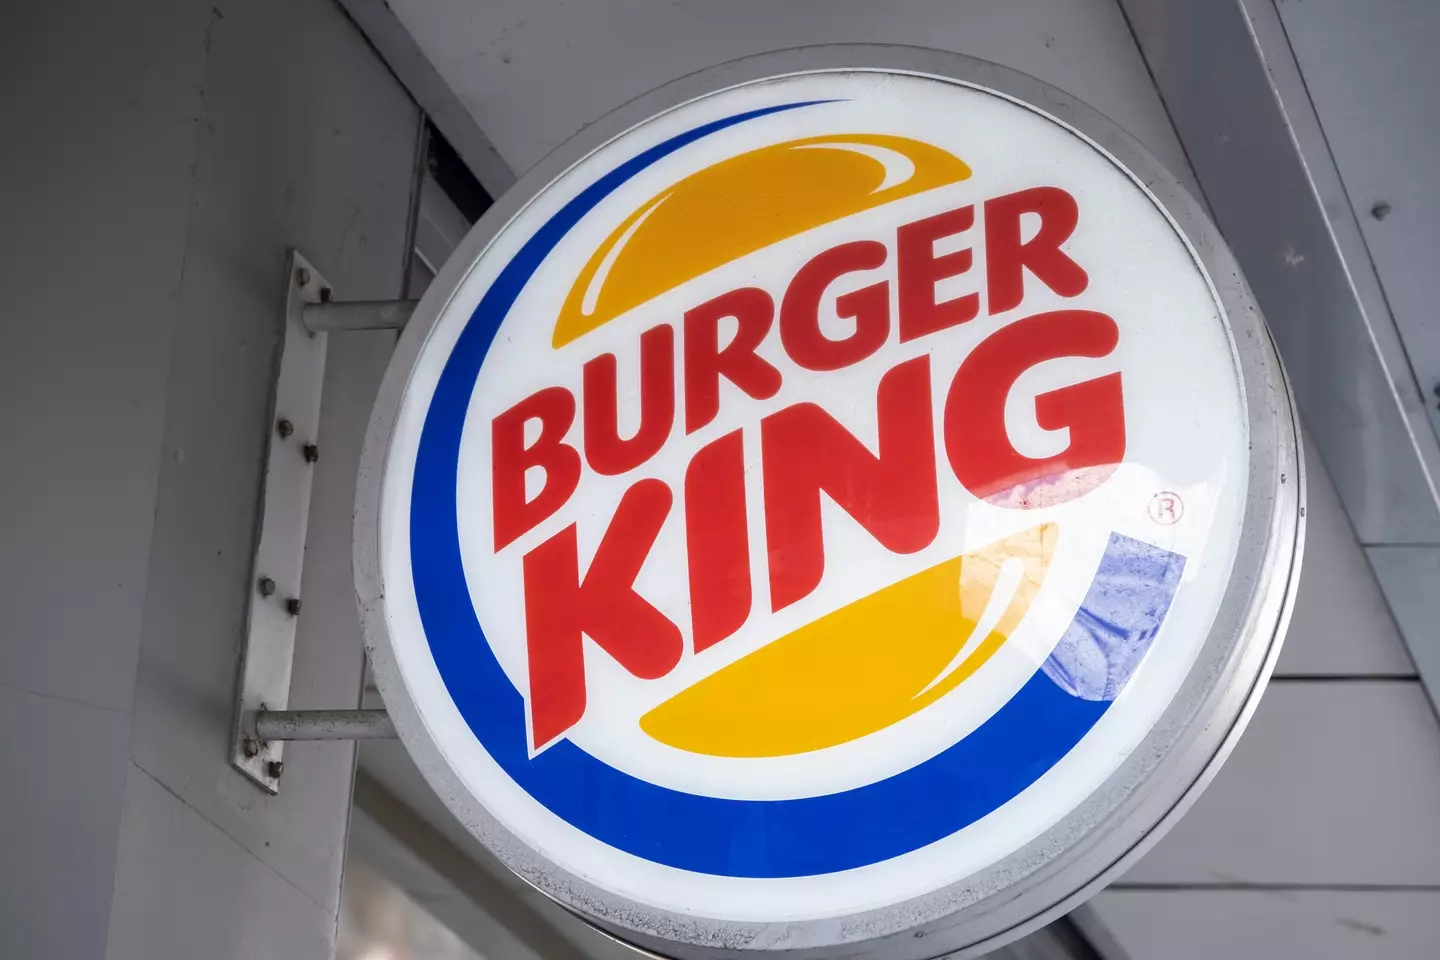 Burger King has denied any wrongdoing.